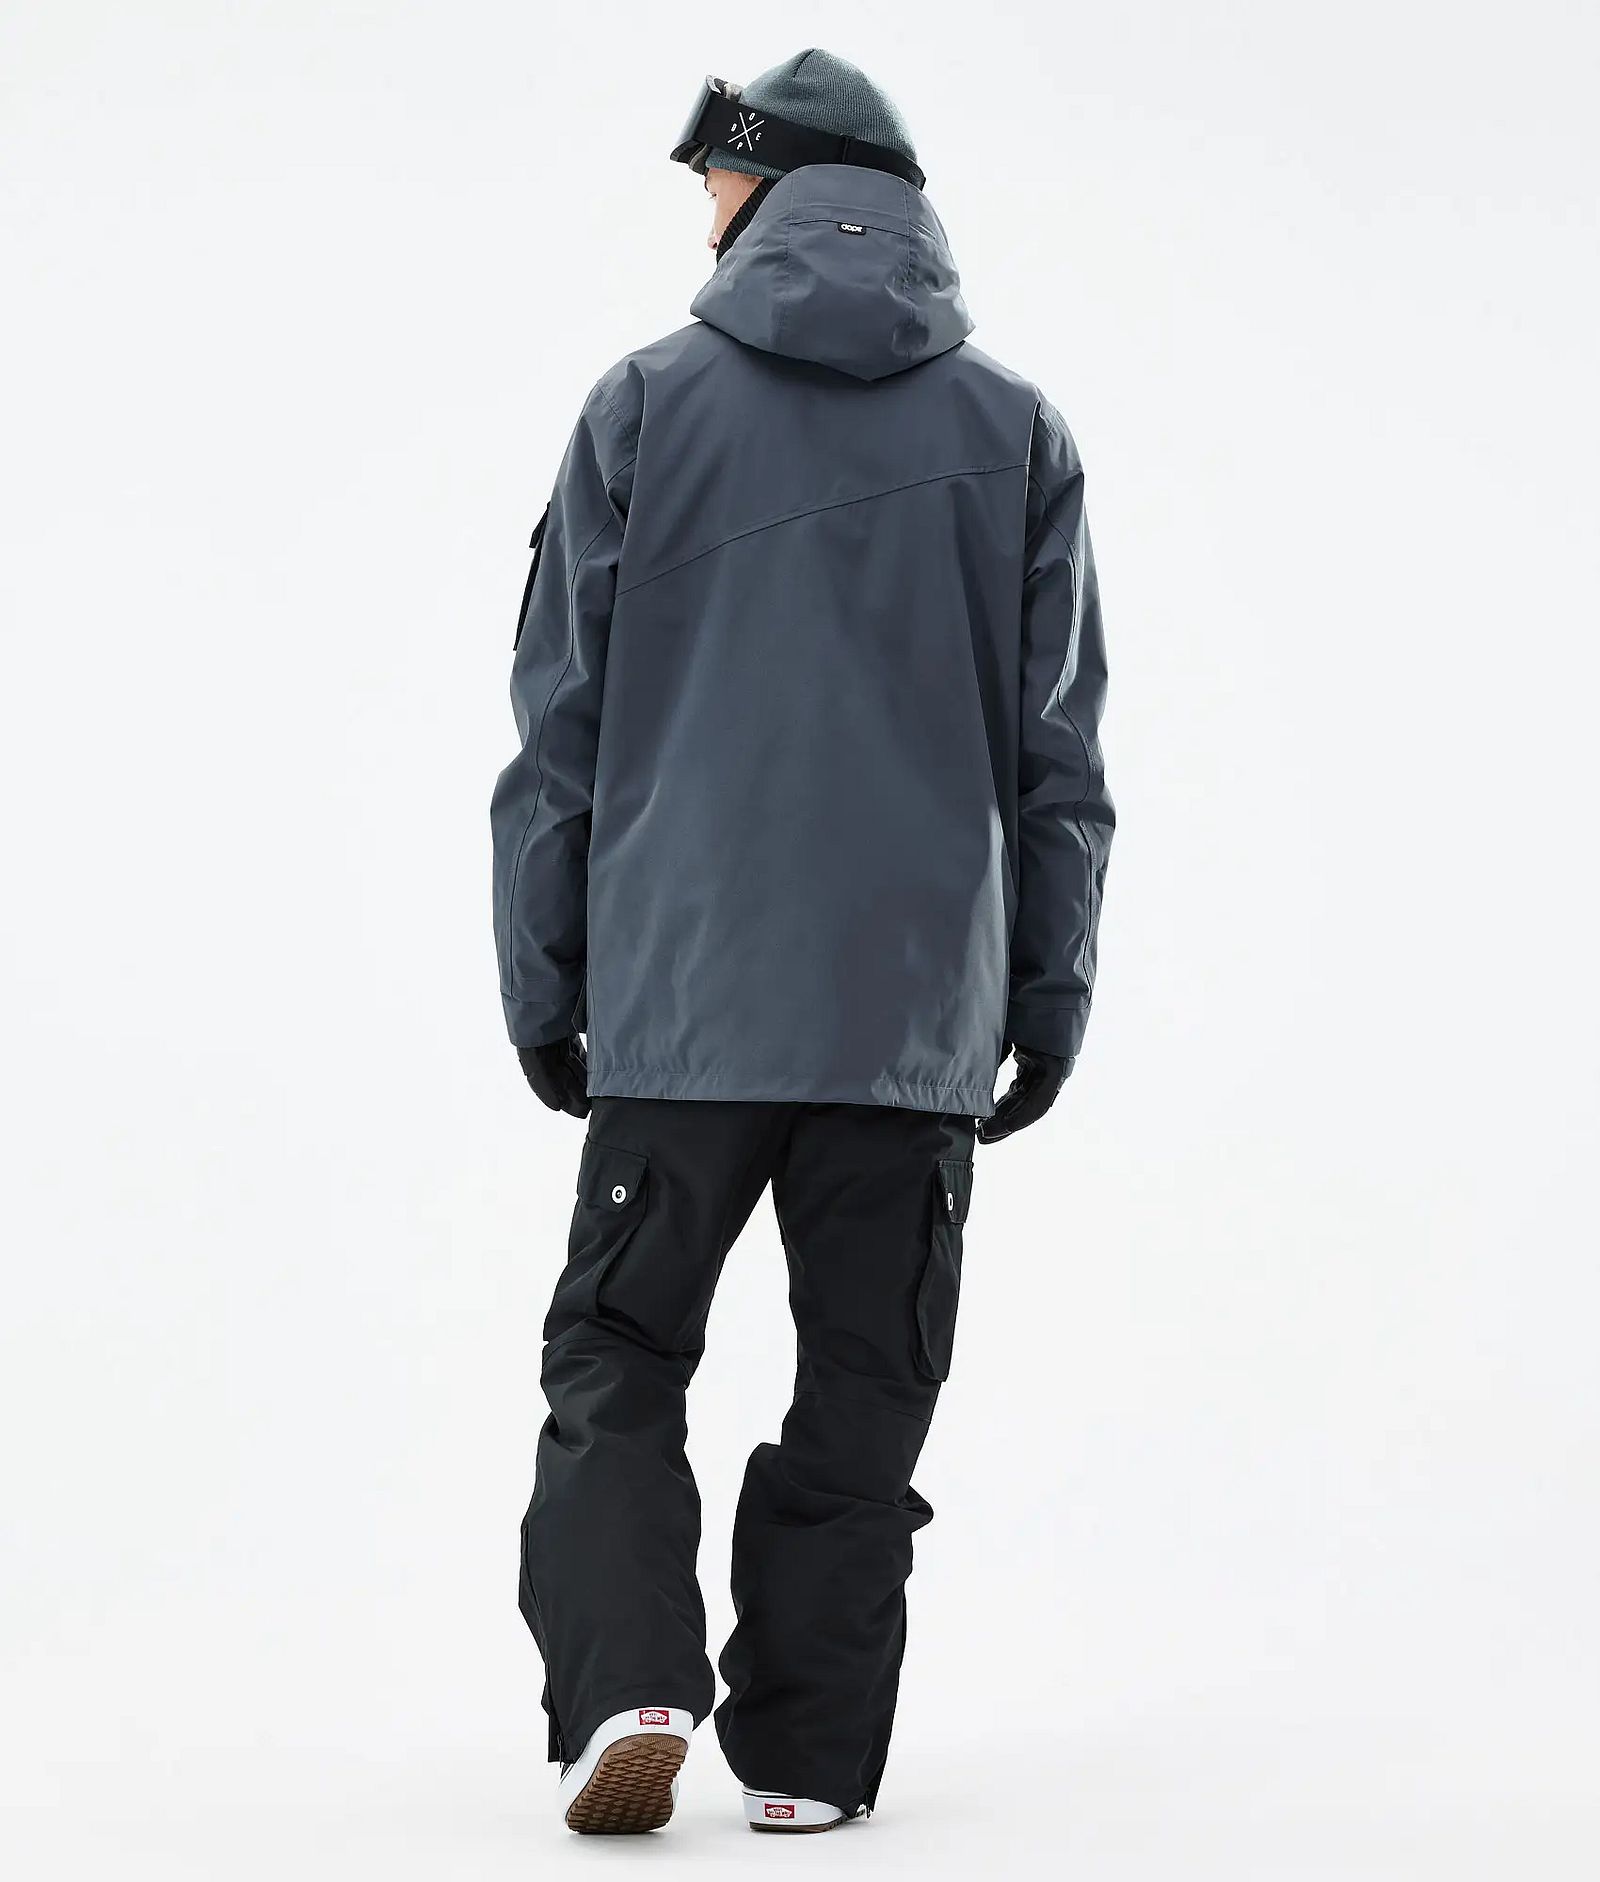 Adept Outfit Snowboard Uomo Metal Blue/Black